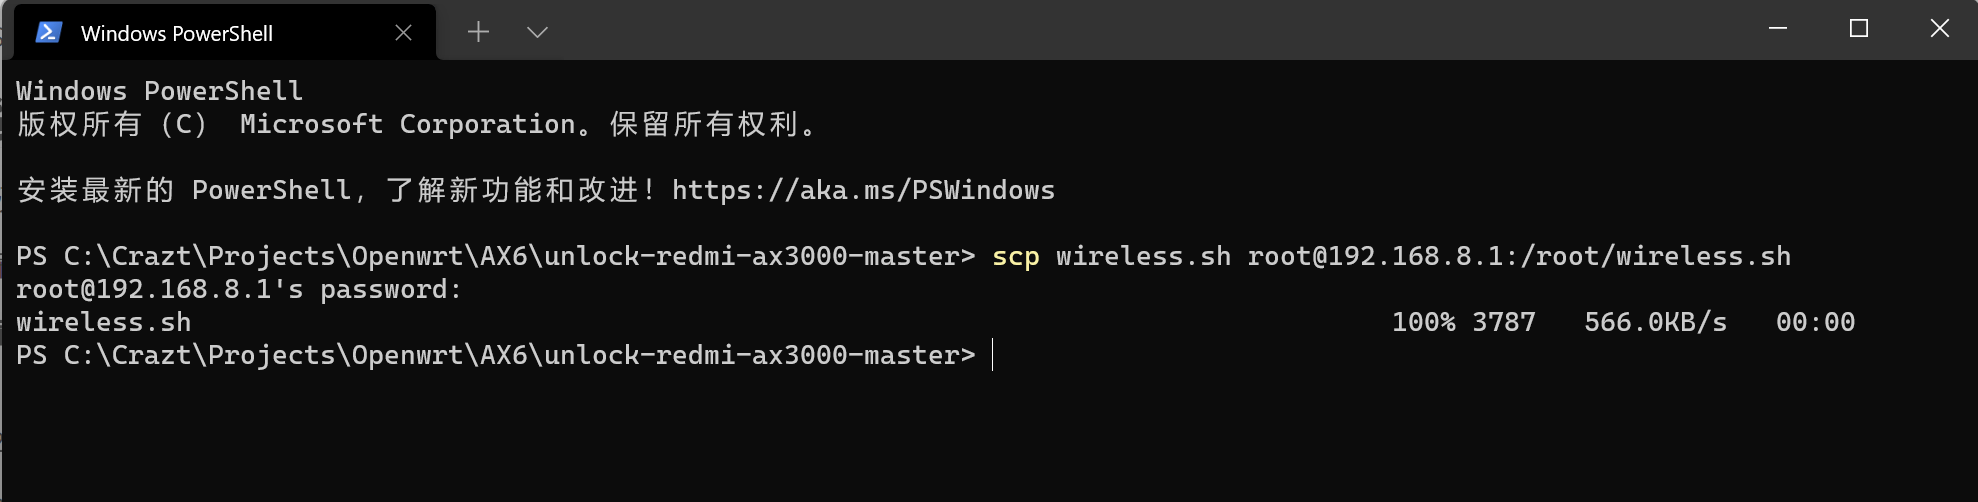 SCP上传解锁脚本至已有的OpenWRT路由器